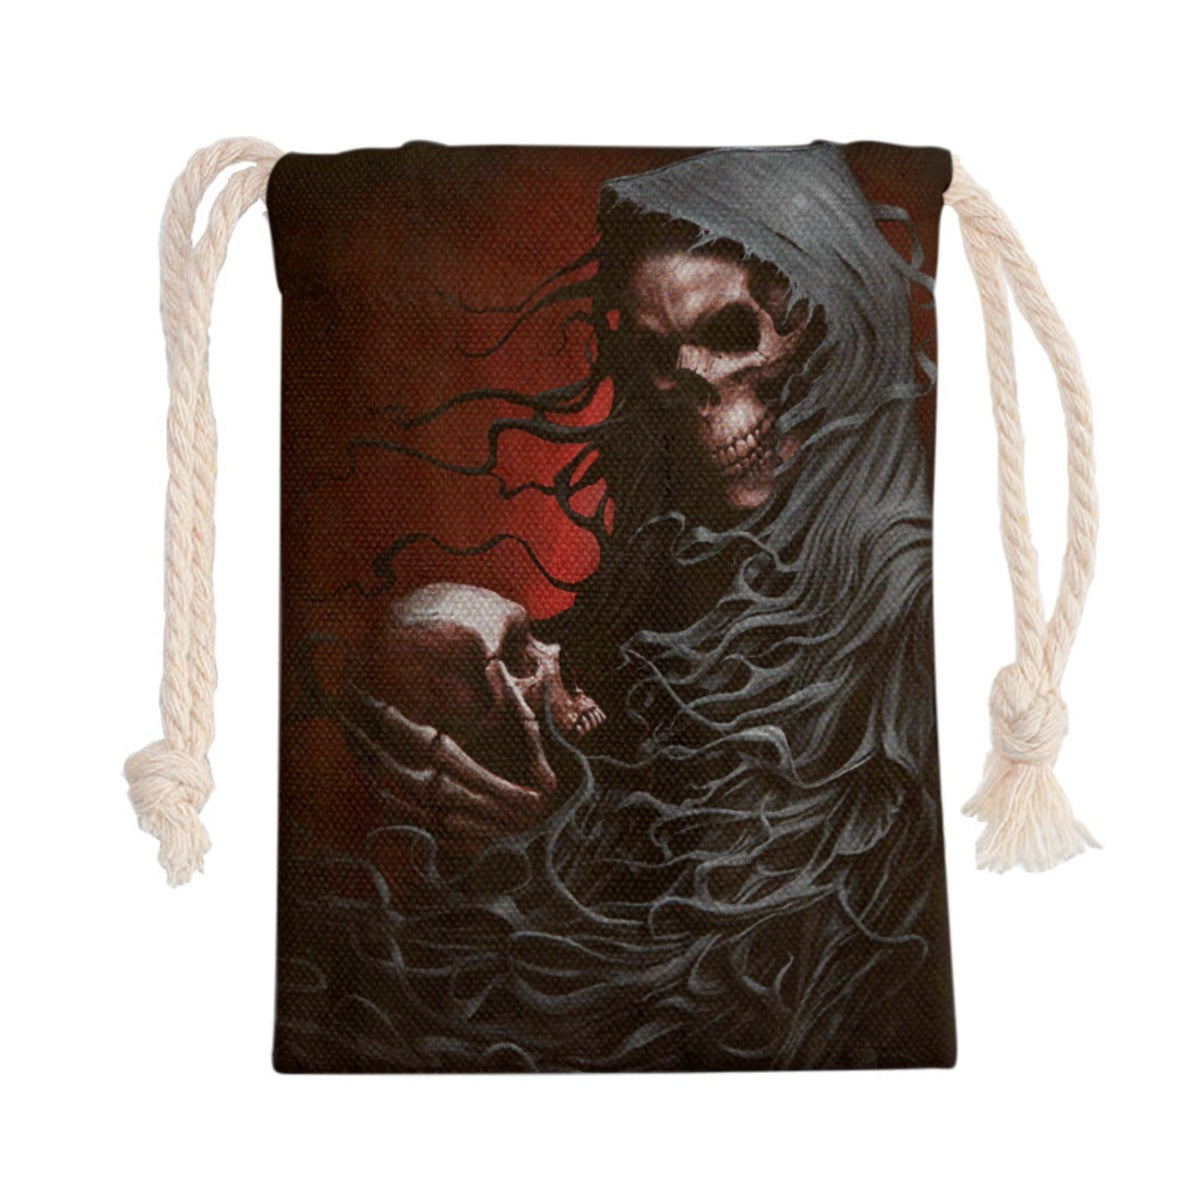 Grim reaper gothic Drawstring Bag, Halloween horror skull skeleton handbag shoulder bag purse